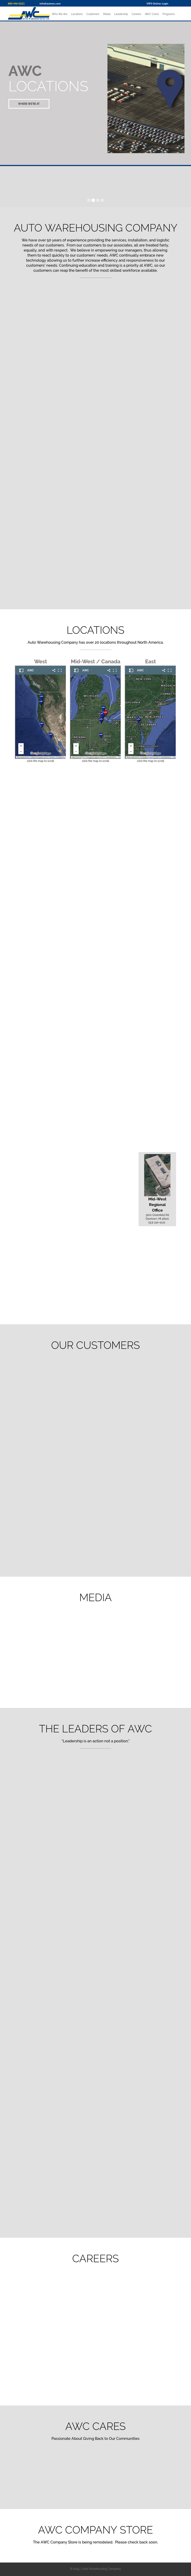 Auto Warehousing Logo - Autowc Competitors, Revenue and Employees Company Profile